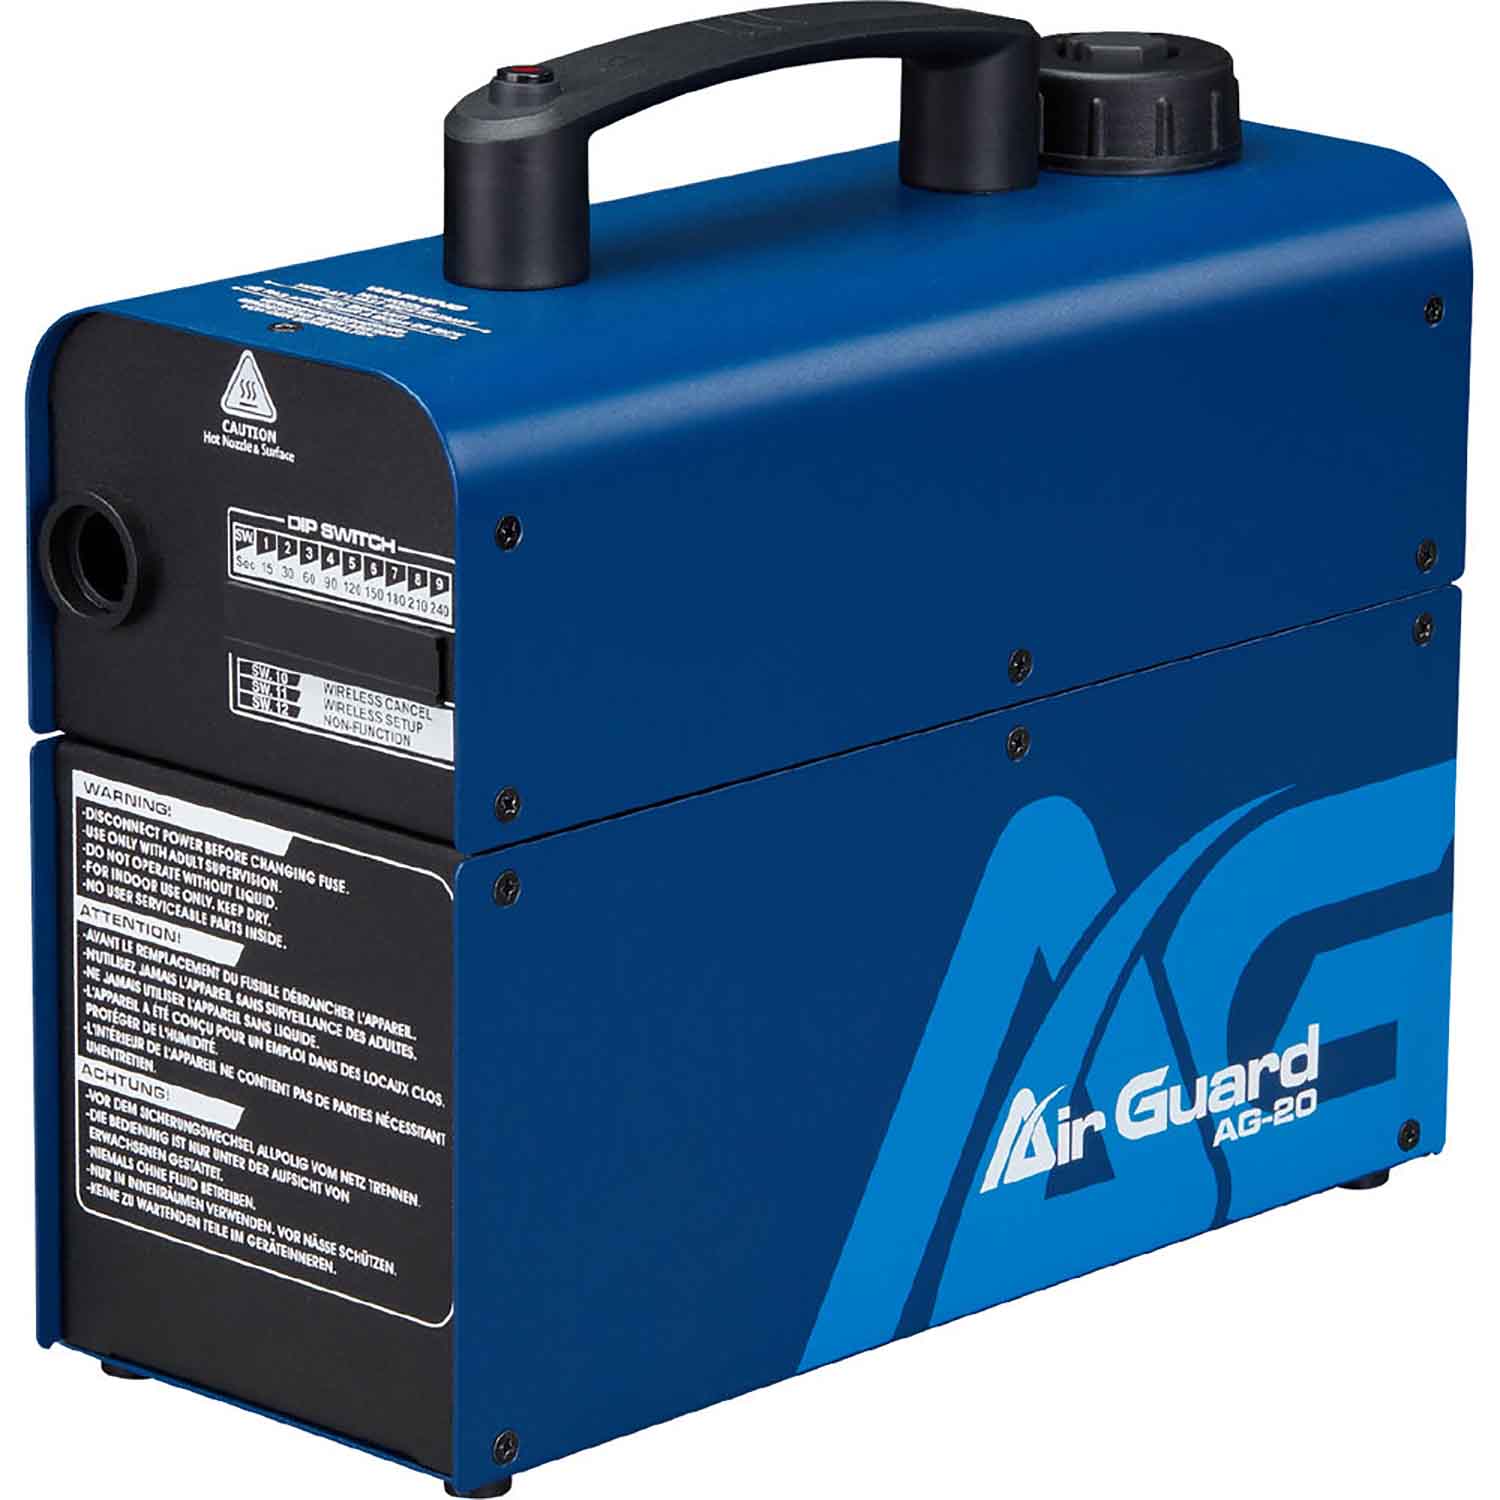 Air Guard AG-20 Battery Powered Portable Sanitizing Machine - Hollywood DJ